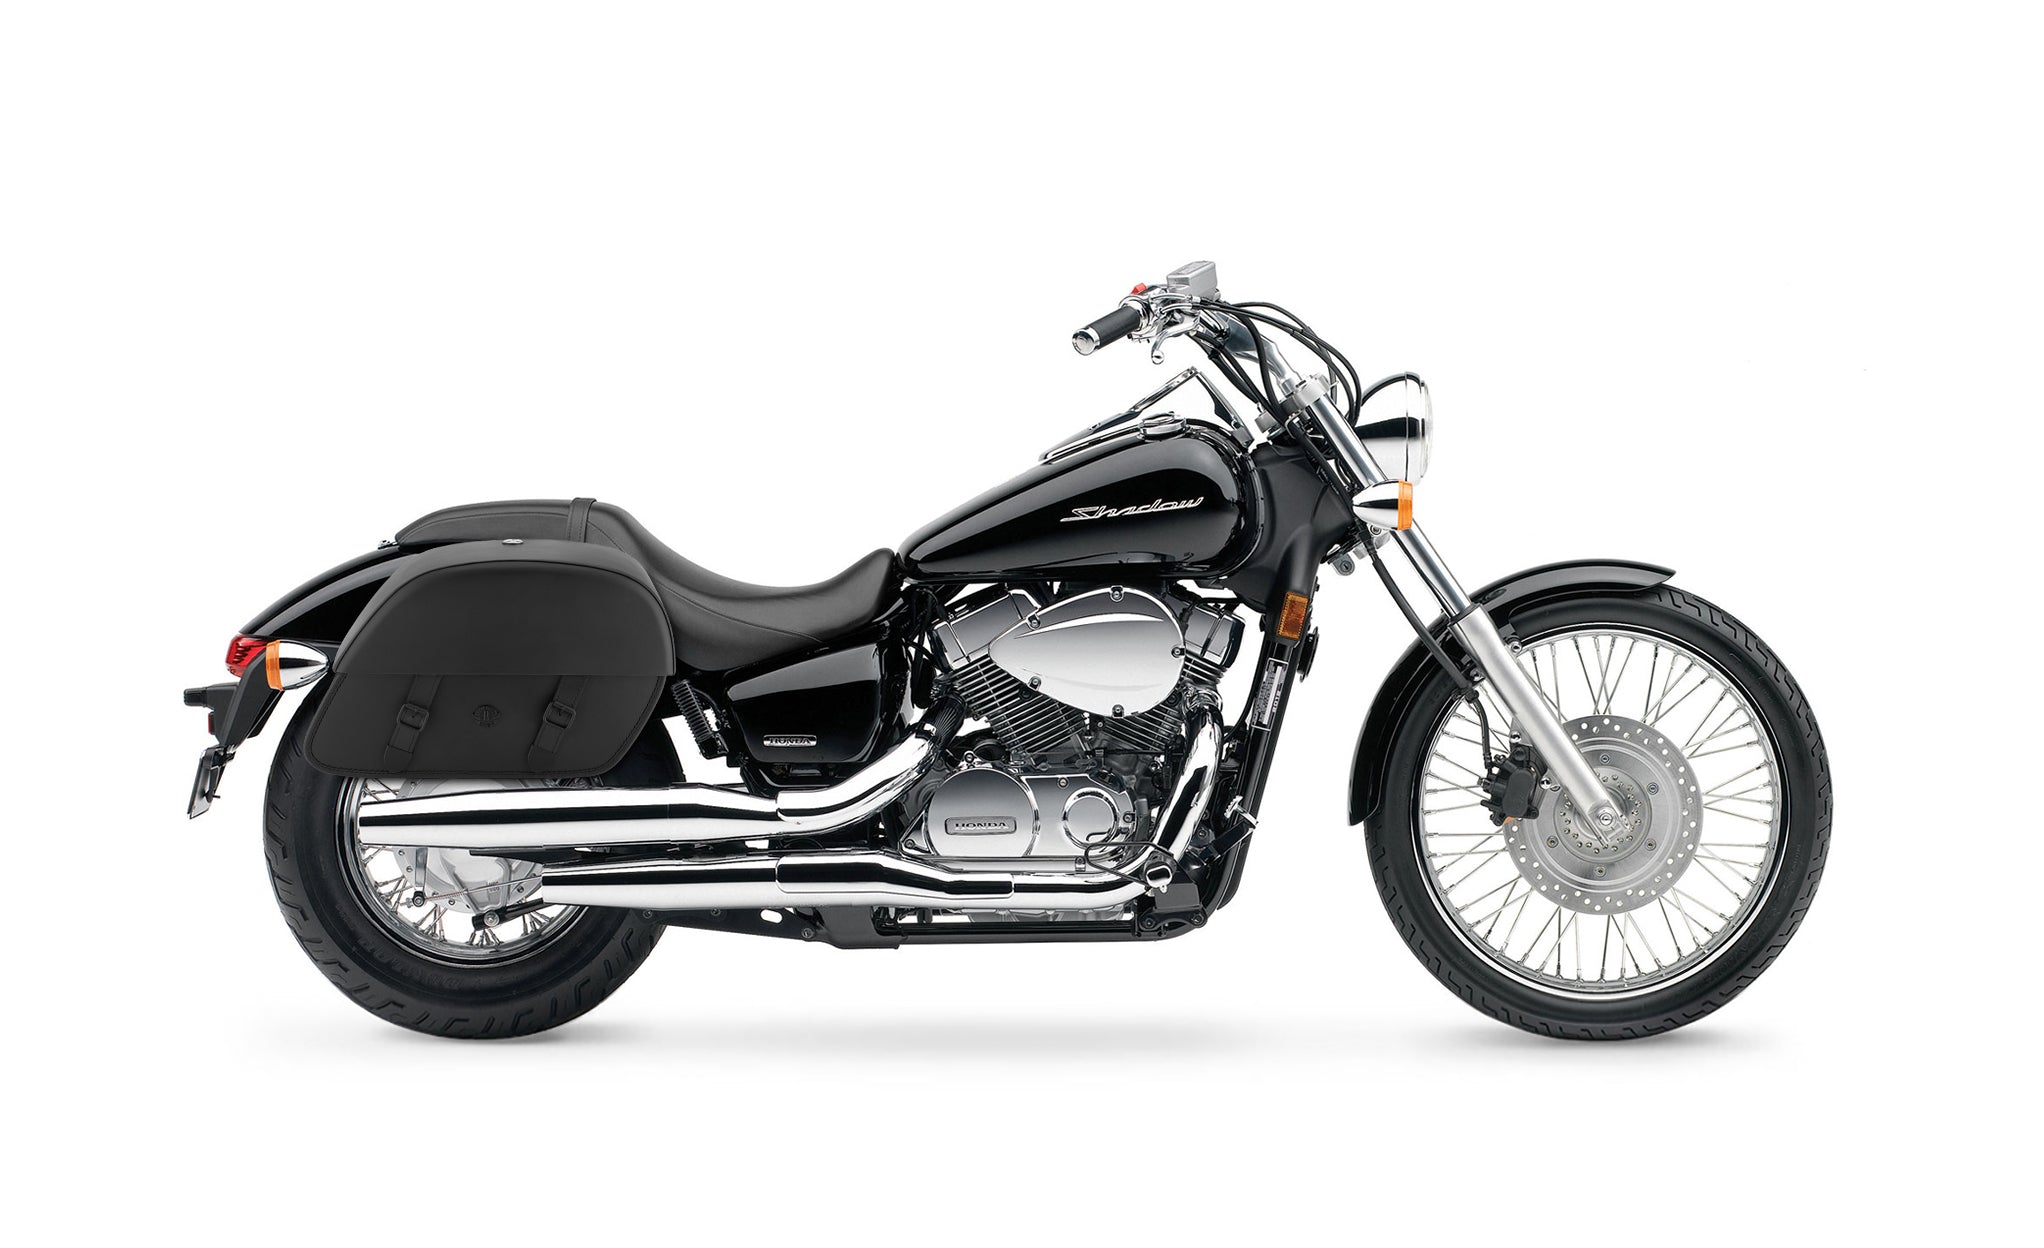 28L - Baelor Medium Shadow 750 (Incl. C2) Motorcycle Saddlebags @expand